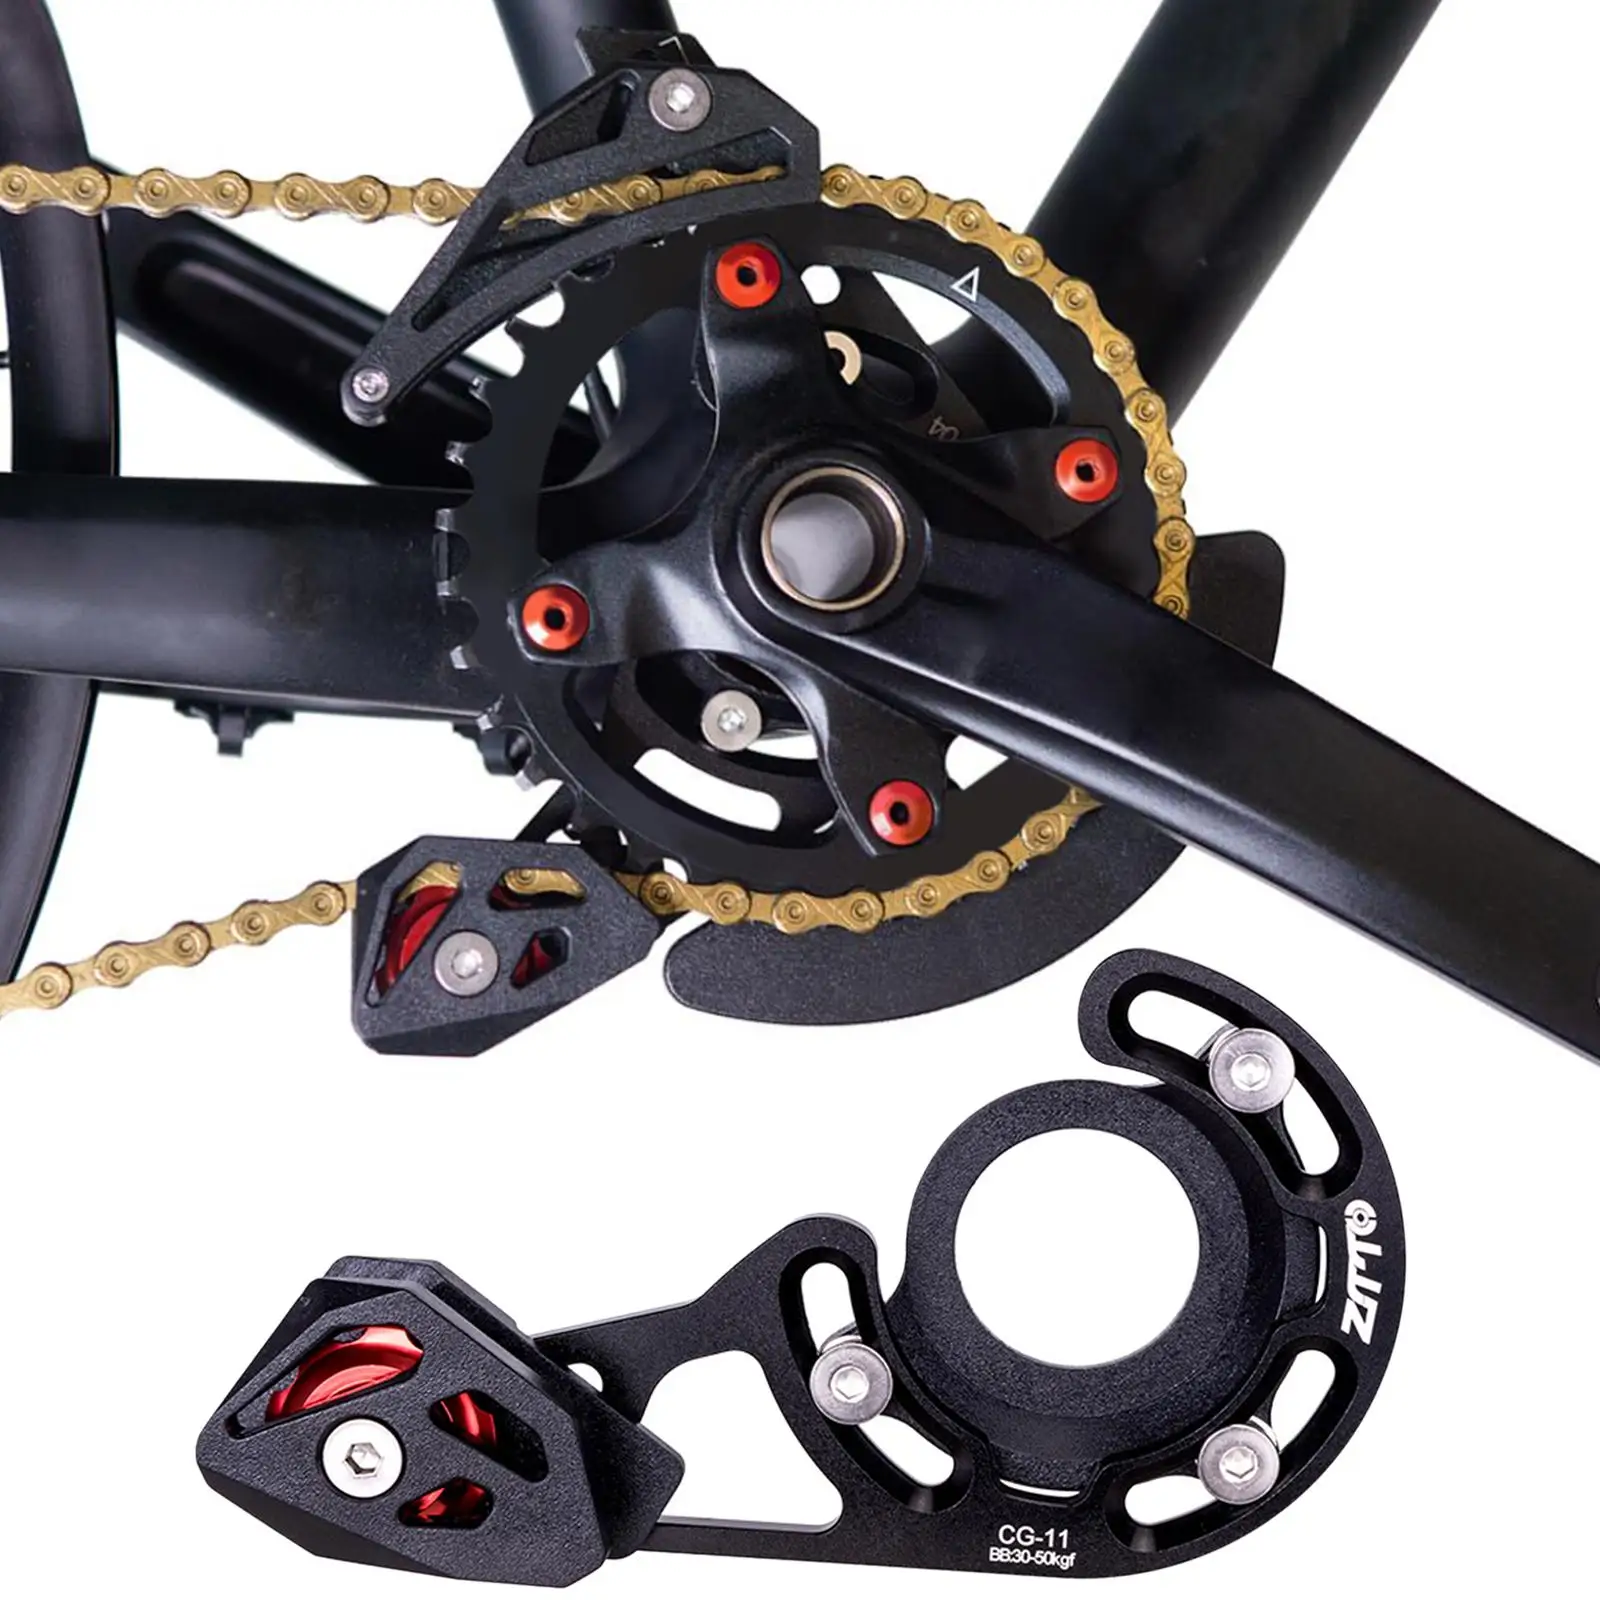 Heavy-Duty Bike Chain Stabilizer for Bottom Bracket - Ultimate Durability